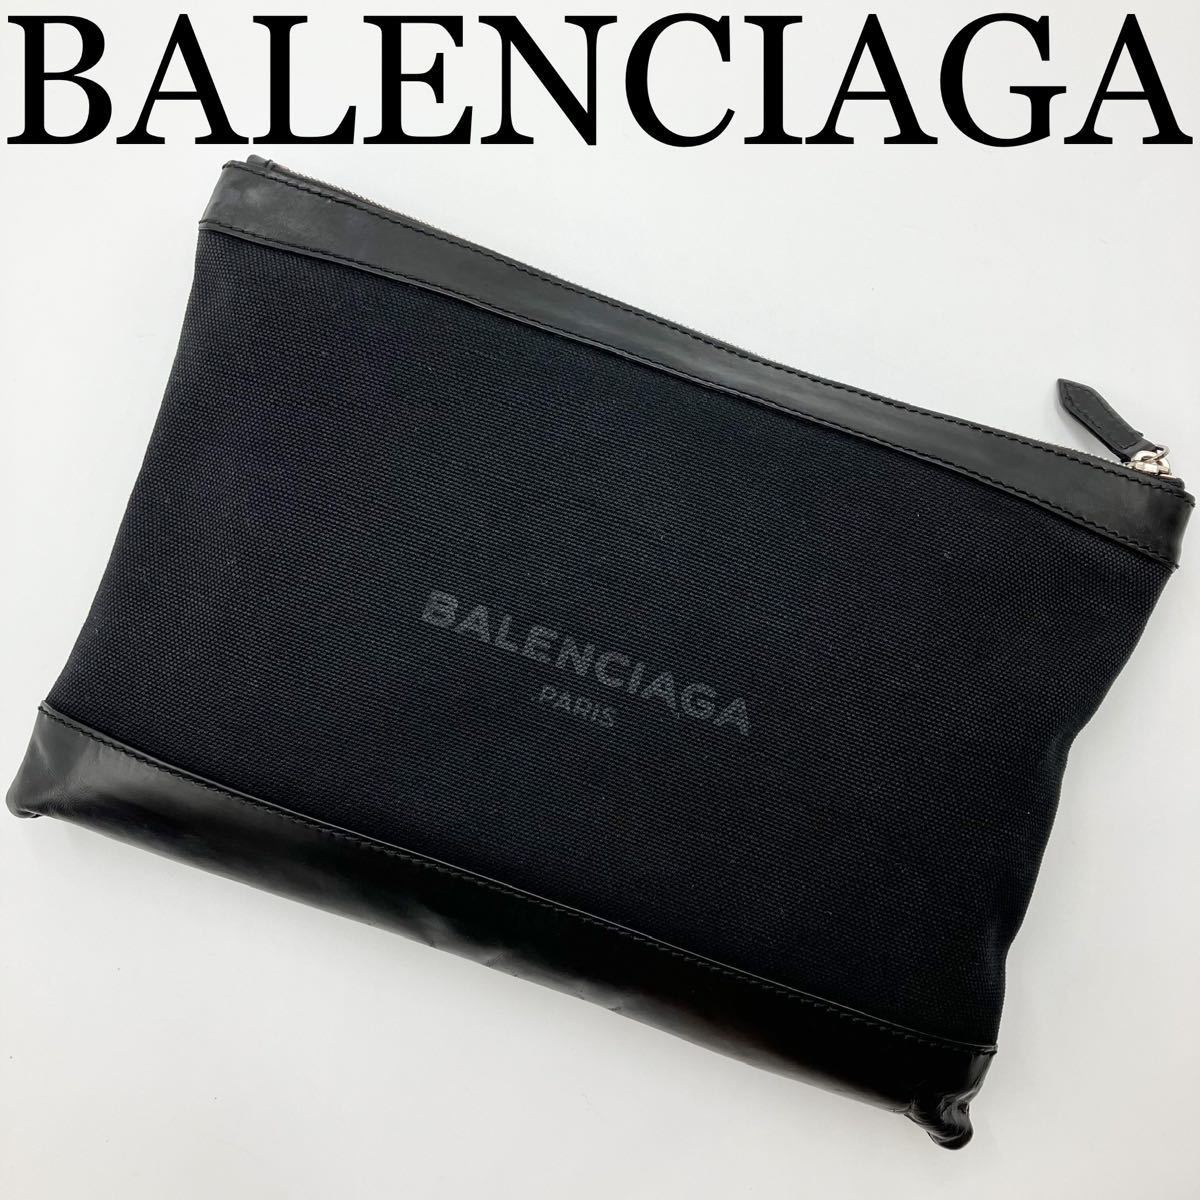 BALENCIAGA バレンシアガ クラッチバッグ セカンドバッグ オールブラック 黒 キャンバス×本革レザー メンズ レディース ユニセックス 美品